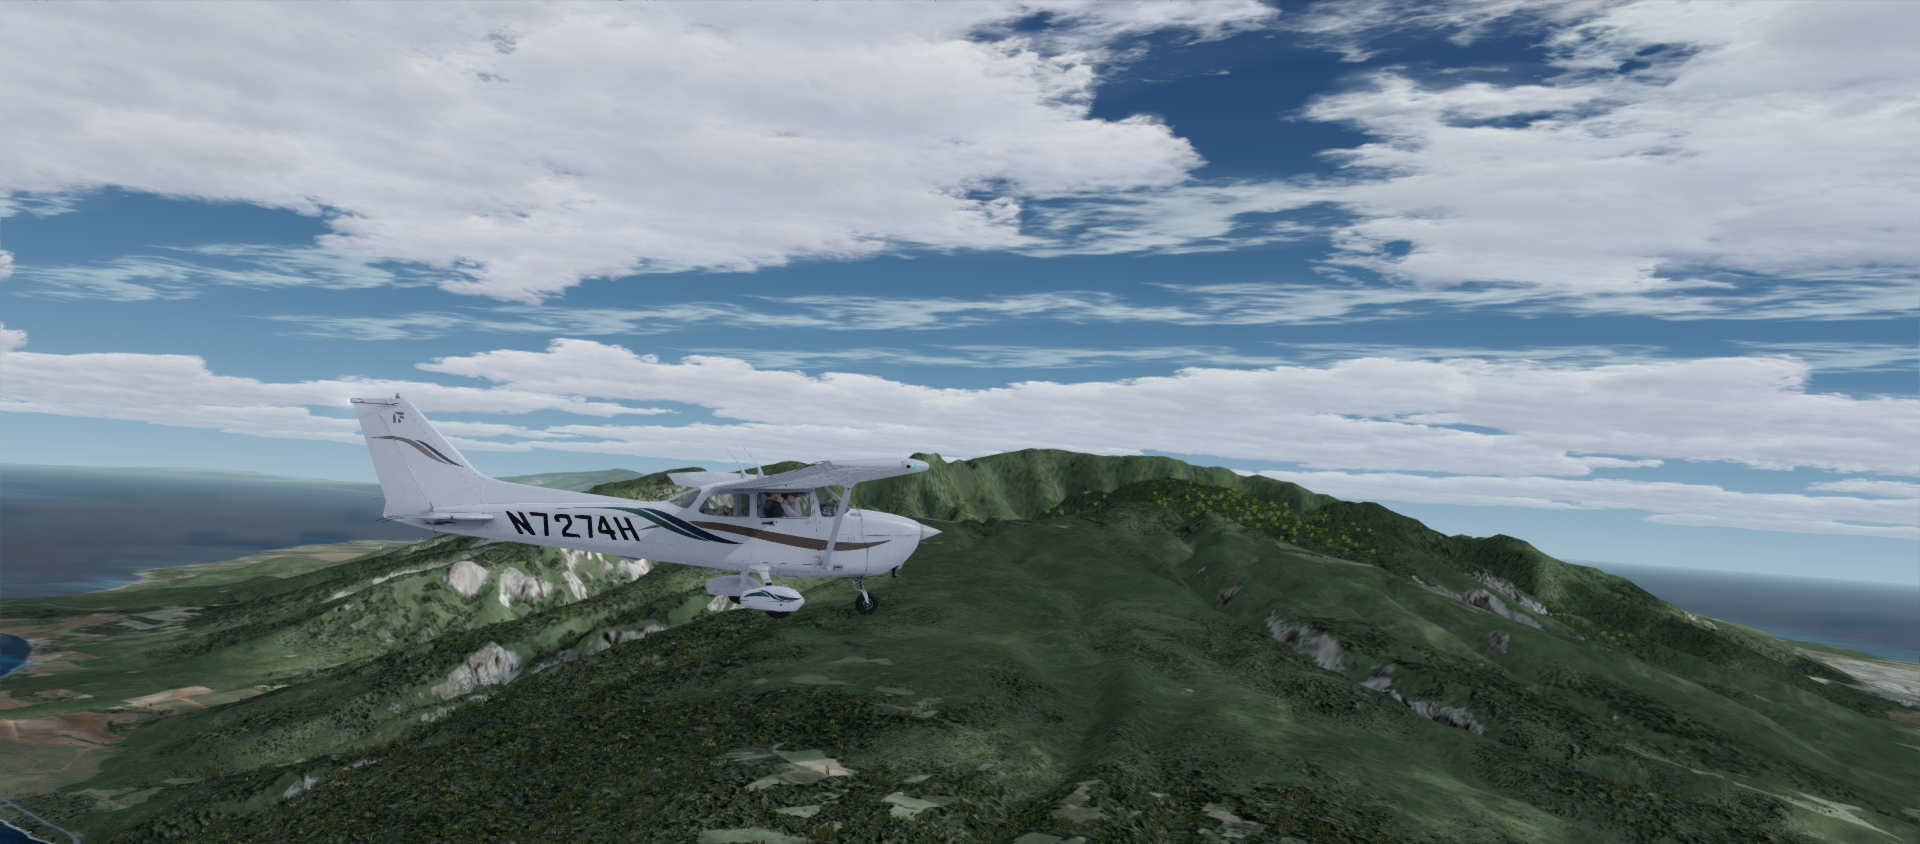 GIFT Airplane over Island